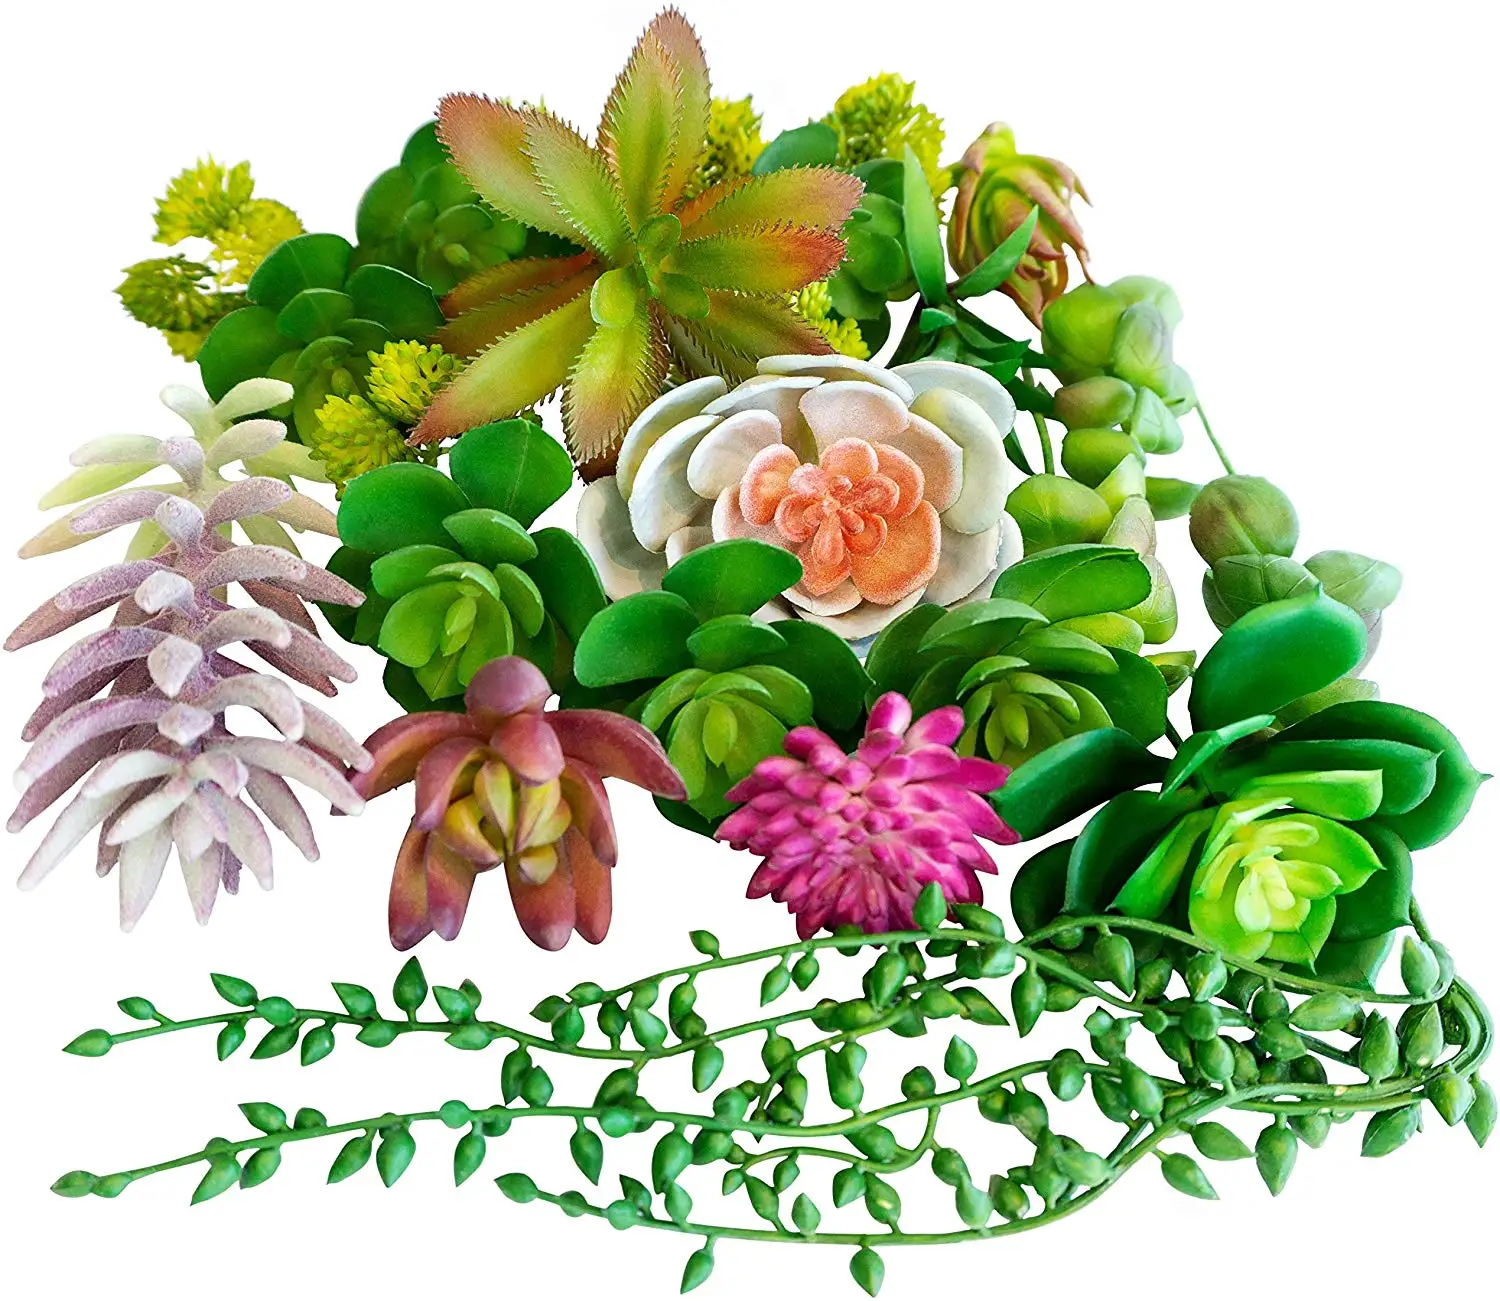 24 Pack Artificial Succulents Plant Garden Miniature Fake Cactus Floral DIY Home